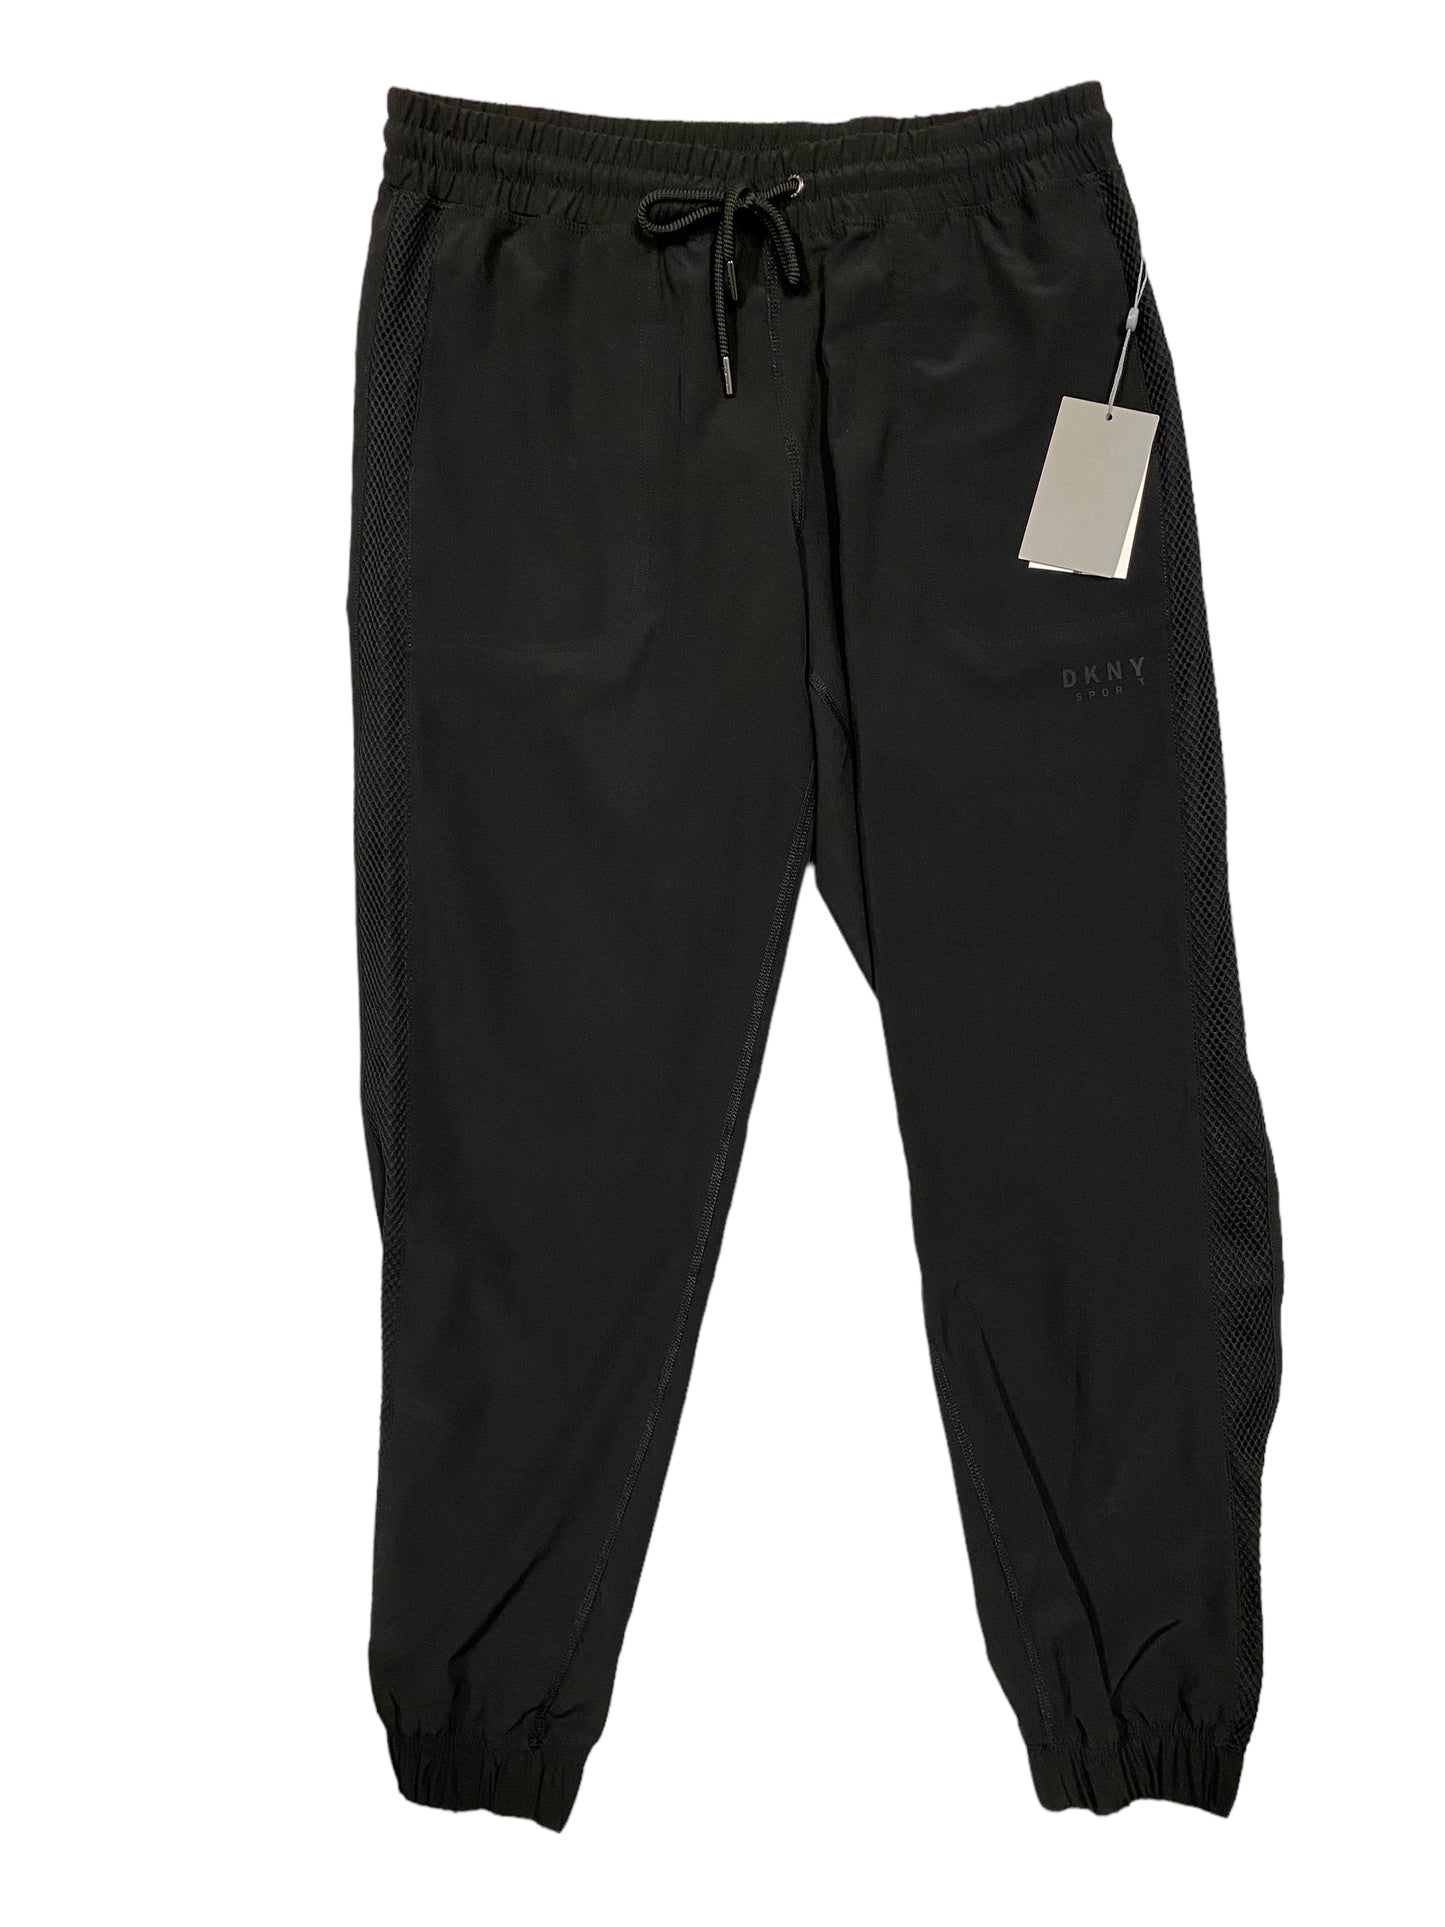 Black Athletic Pants Dkny, Size S